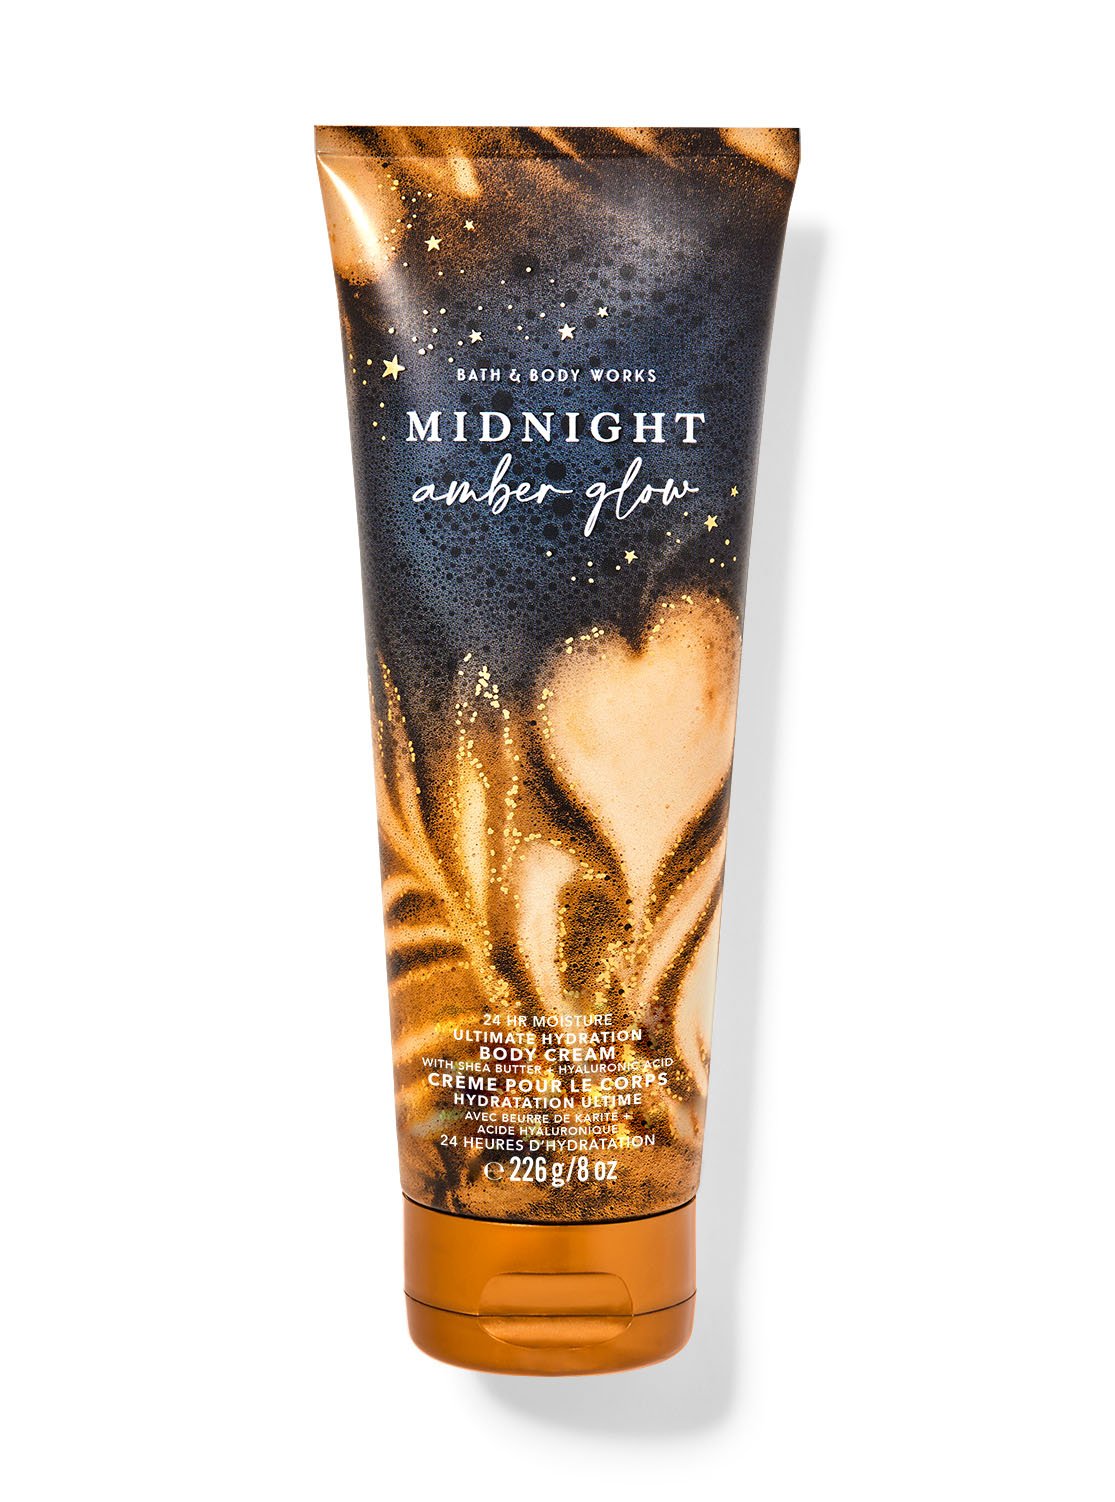 Midnight Amber Glow Ultimate Hydration Body Cream | Bath and Body Works